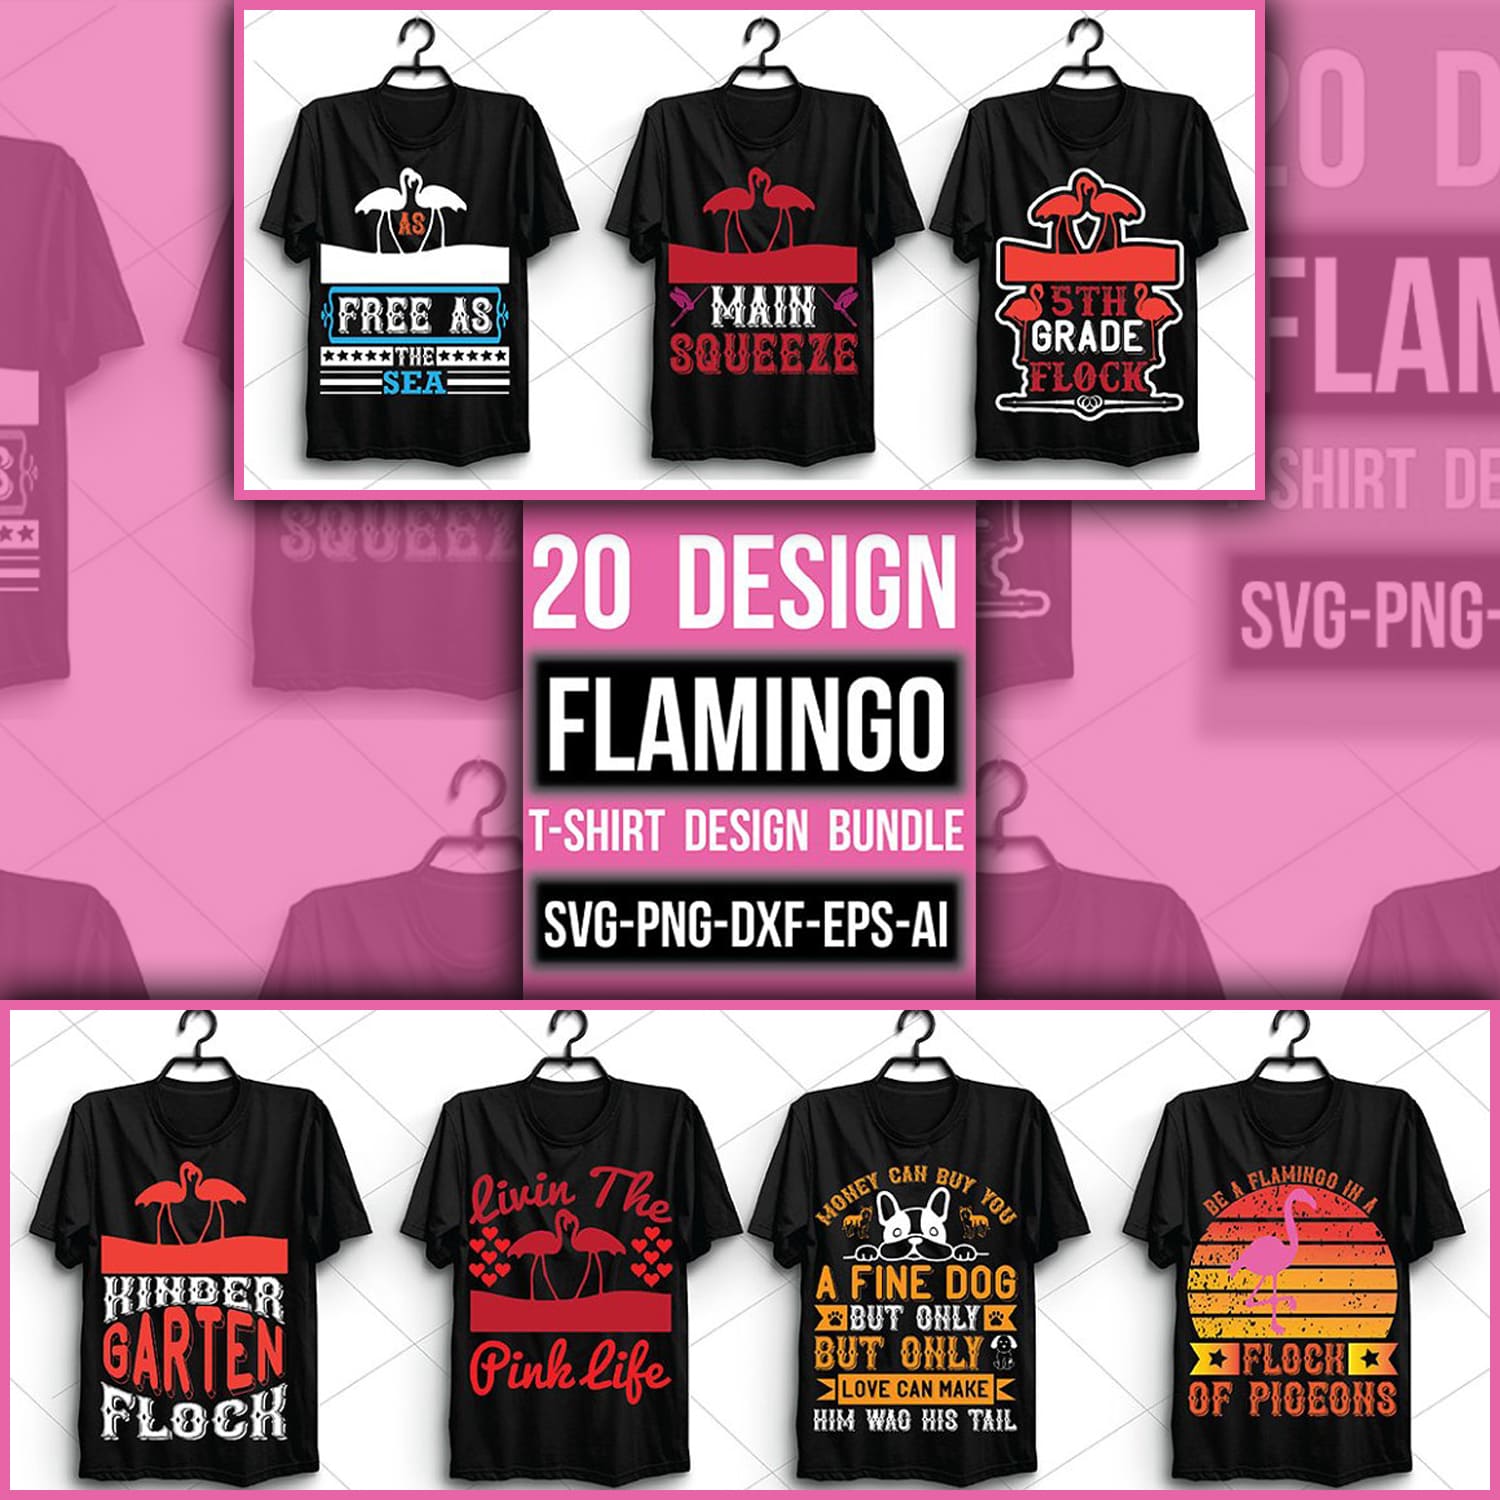 Flamingo T-shirt Design Bundle created by Shopdrop.